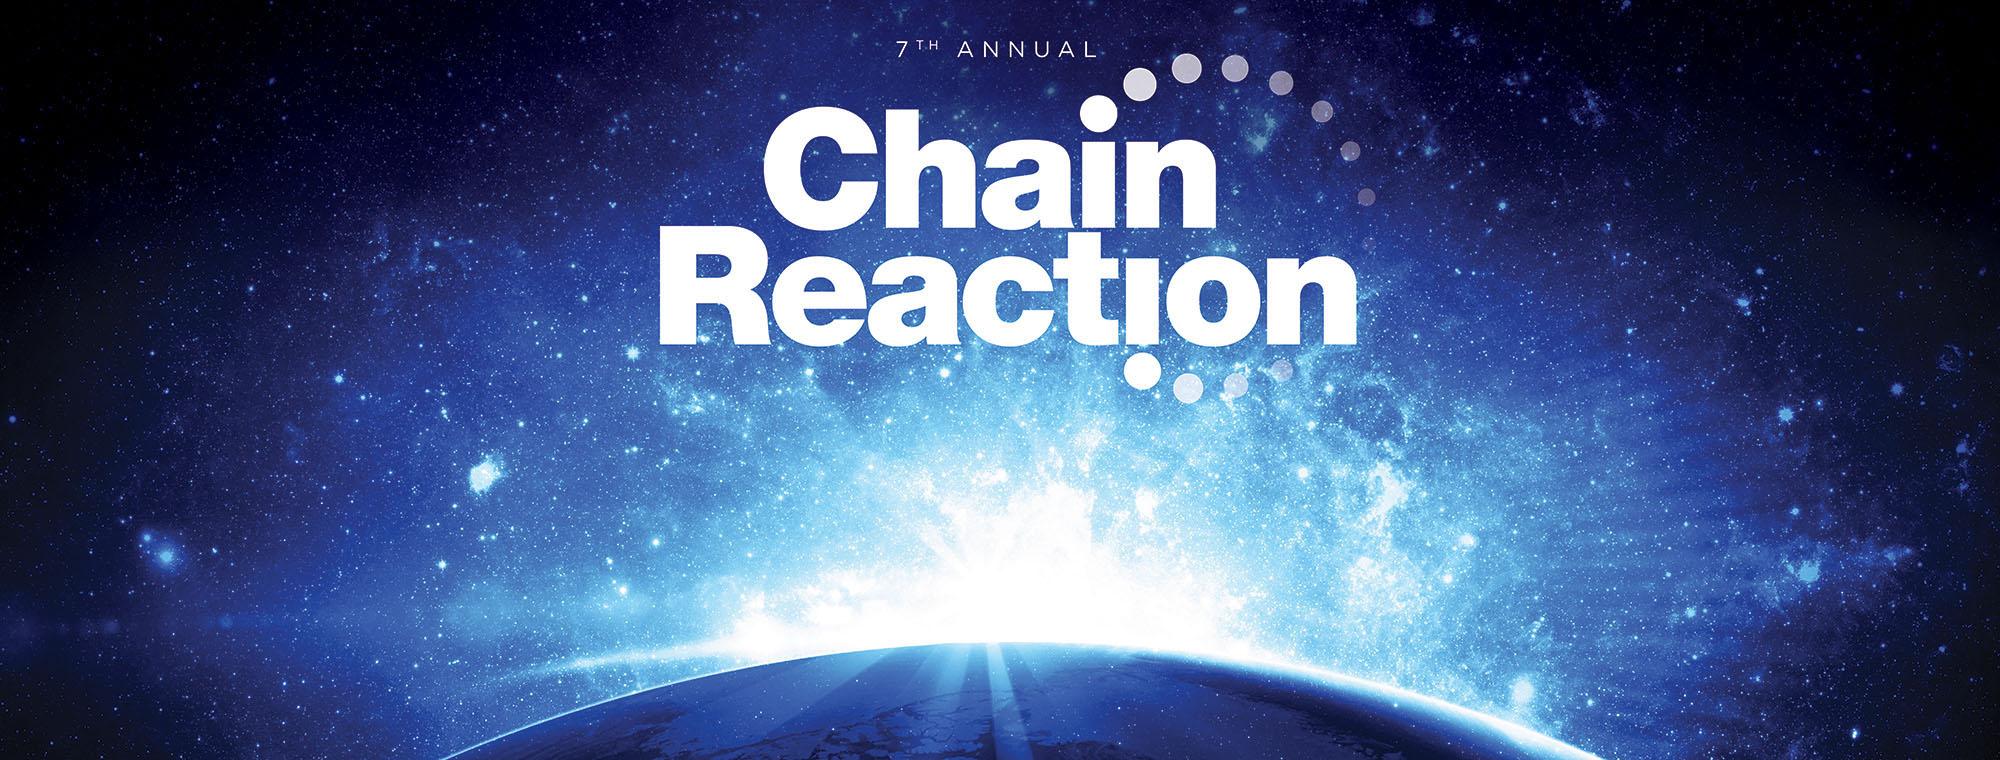 Chain Reaction 2020